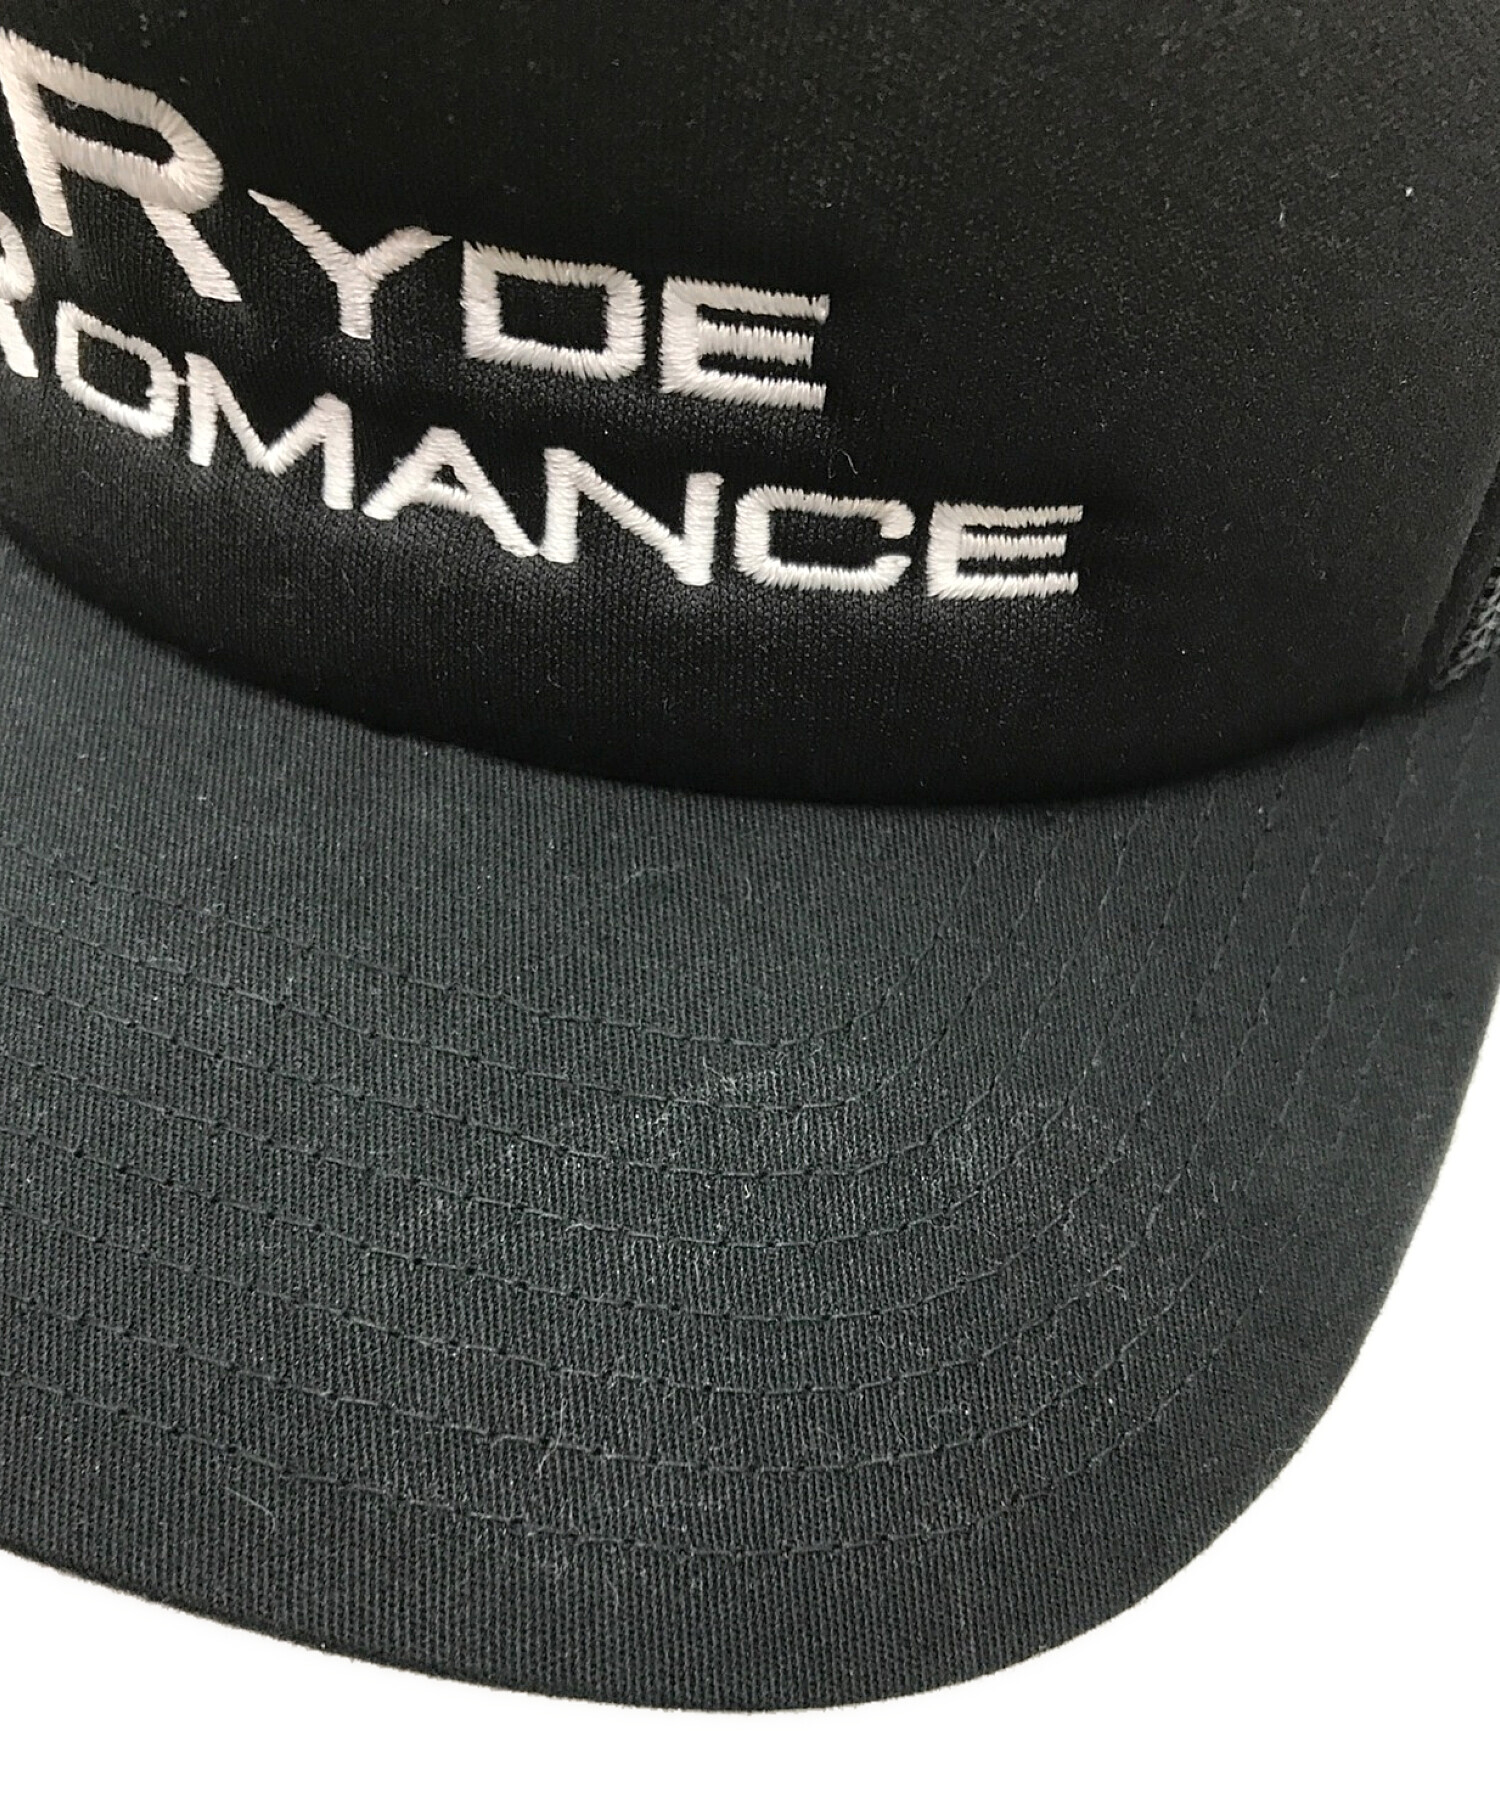 VALLAD RYDE ROMANCE NEW MESH CAP - キャップ